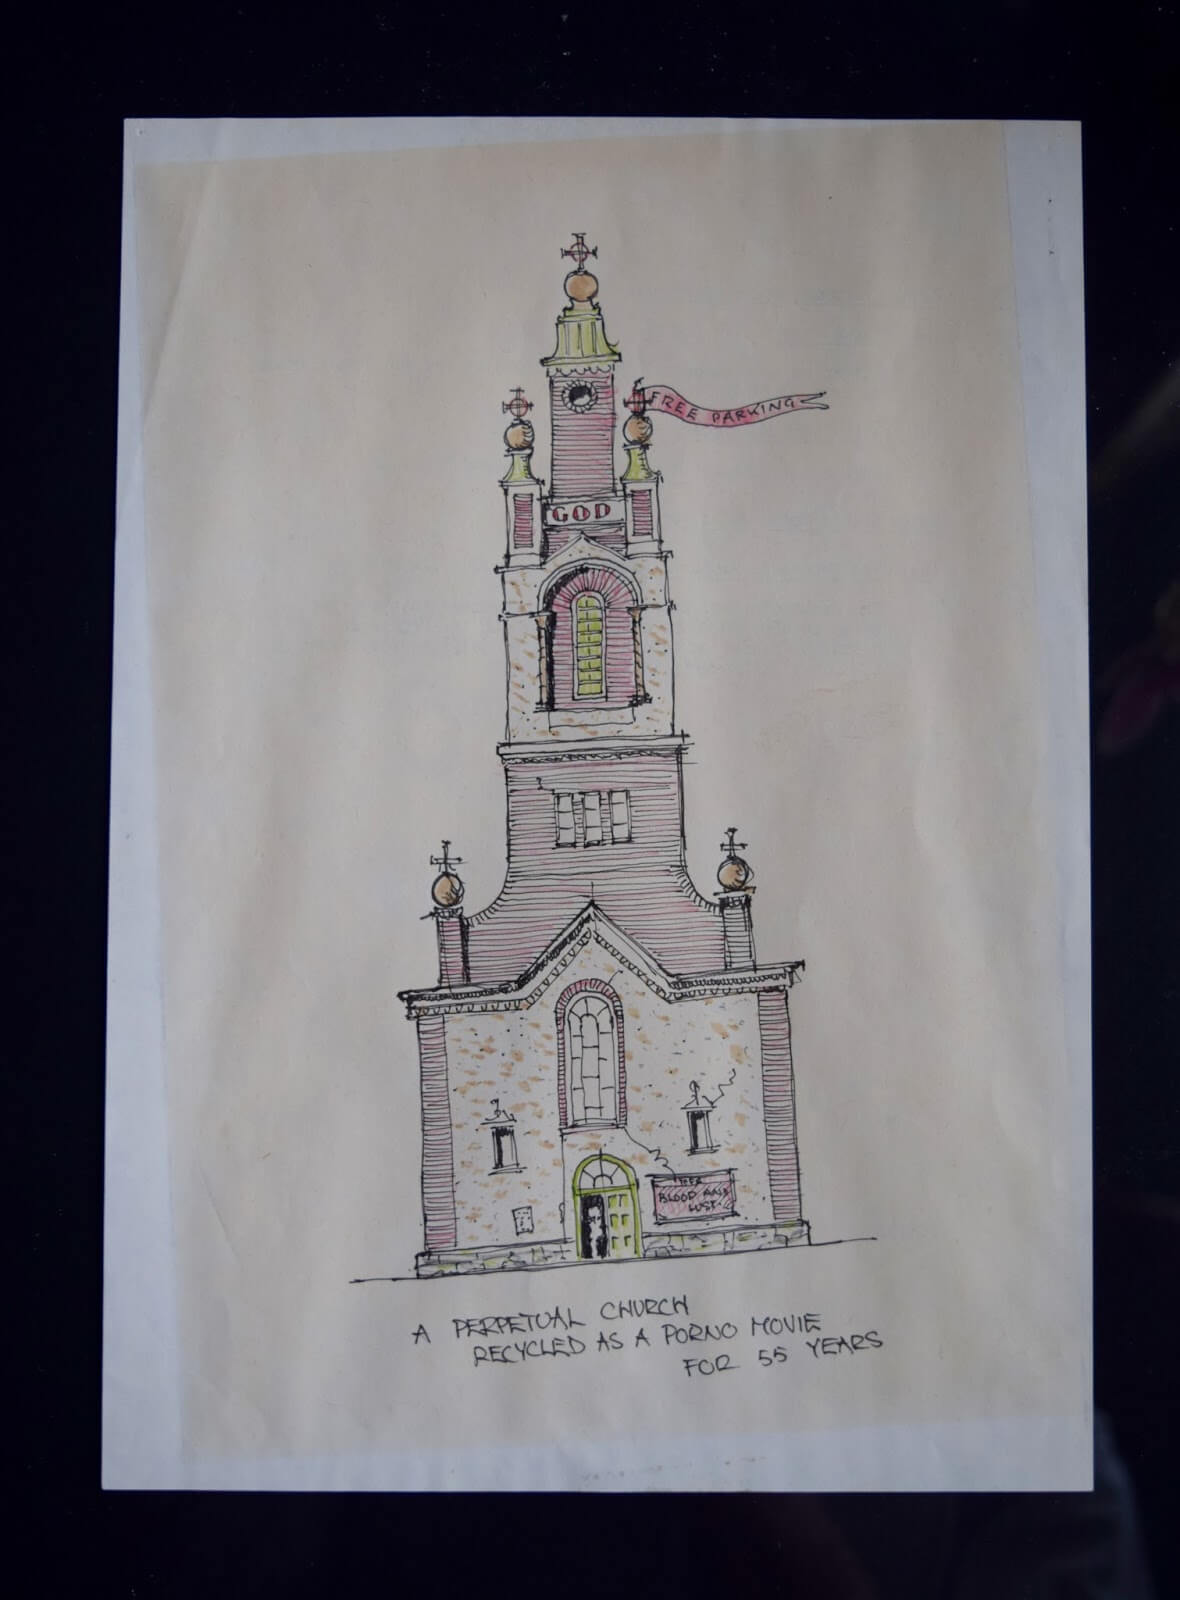 A colourful sketch of a church.